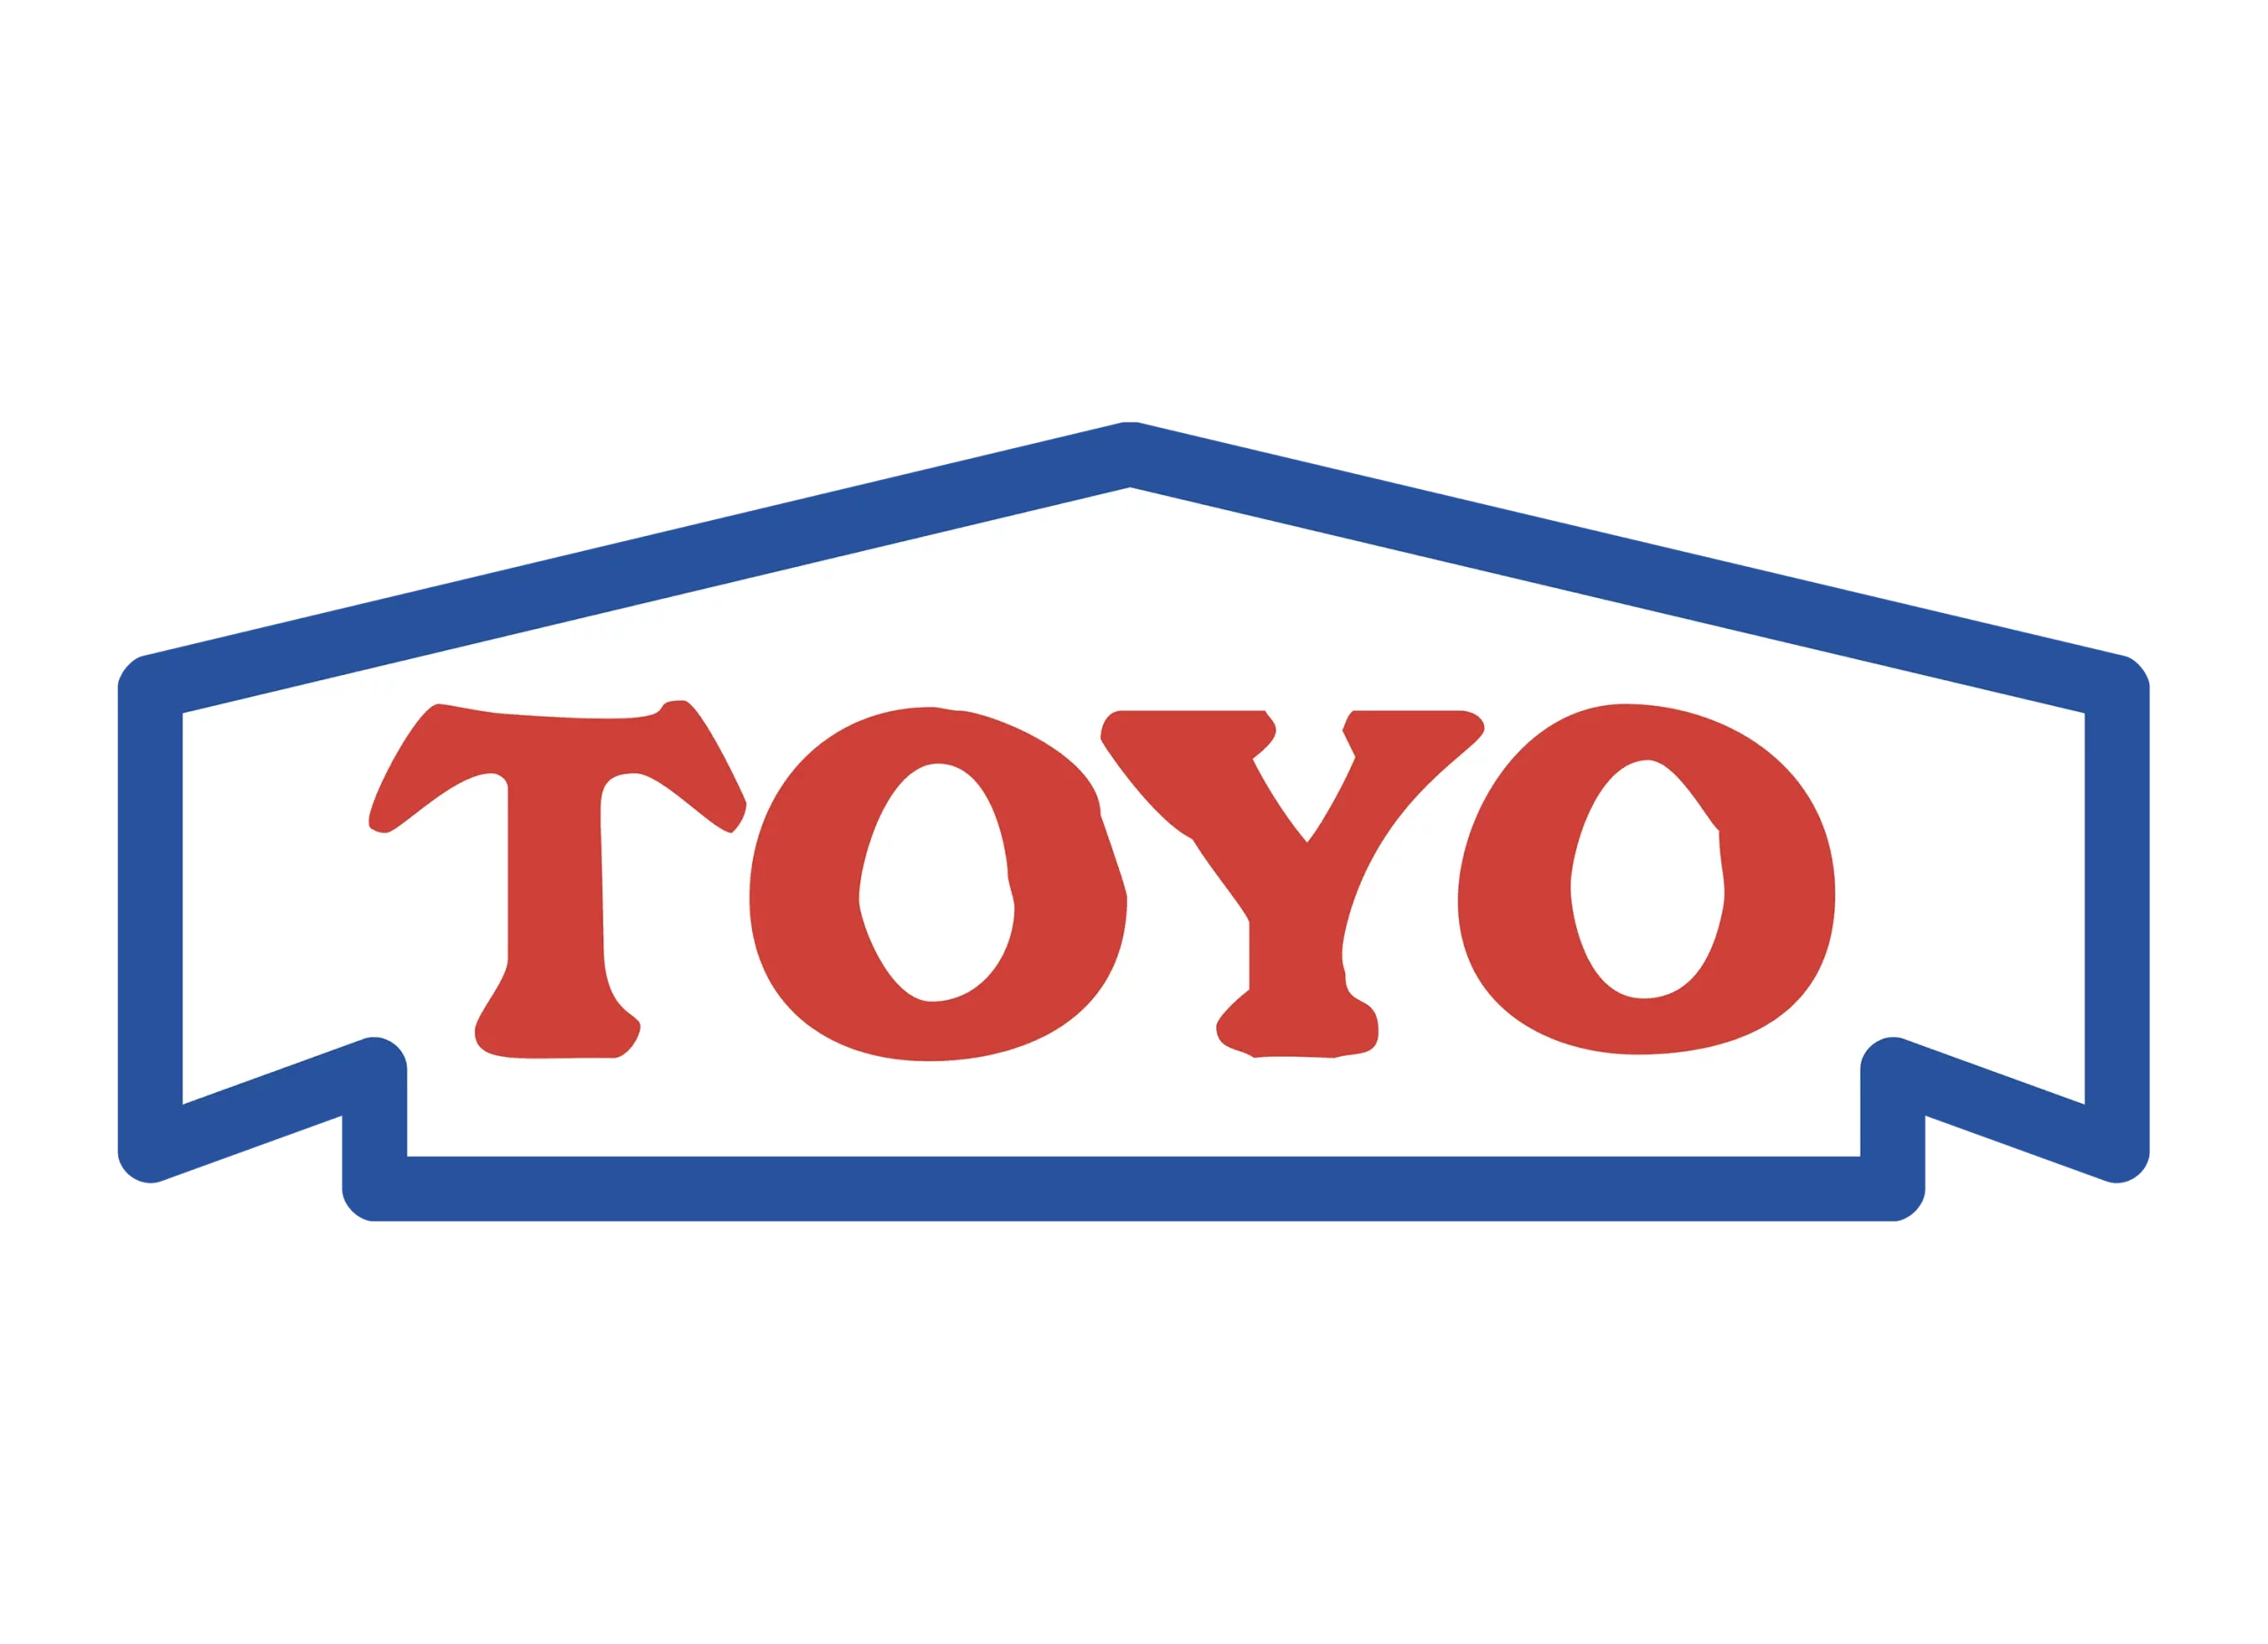 Toyo logo 1970